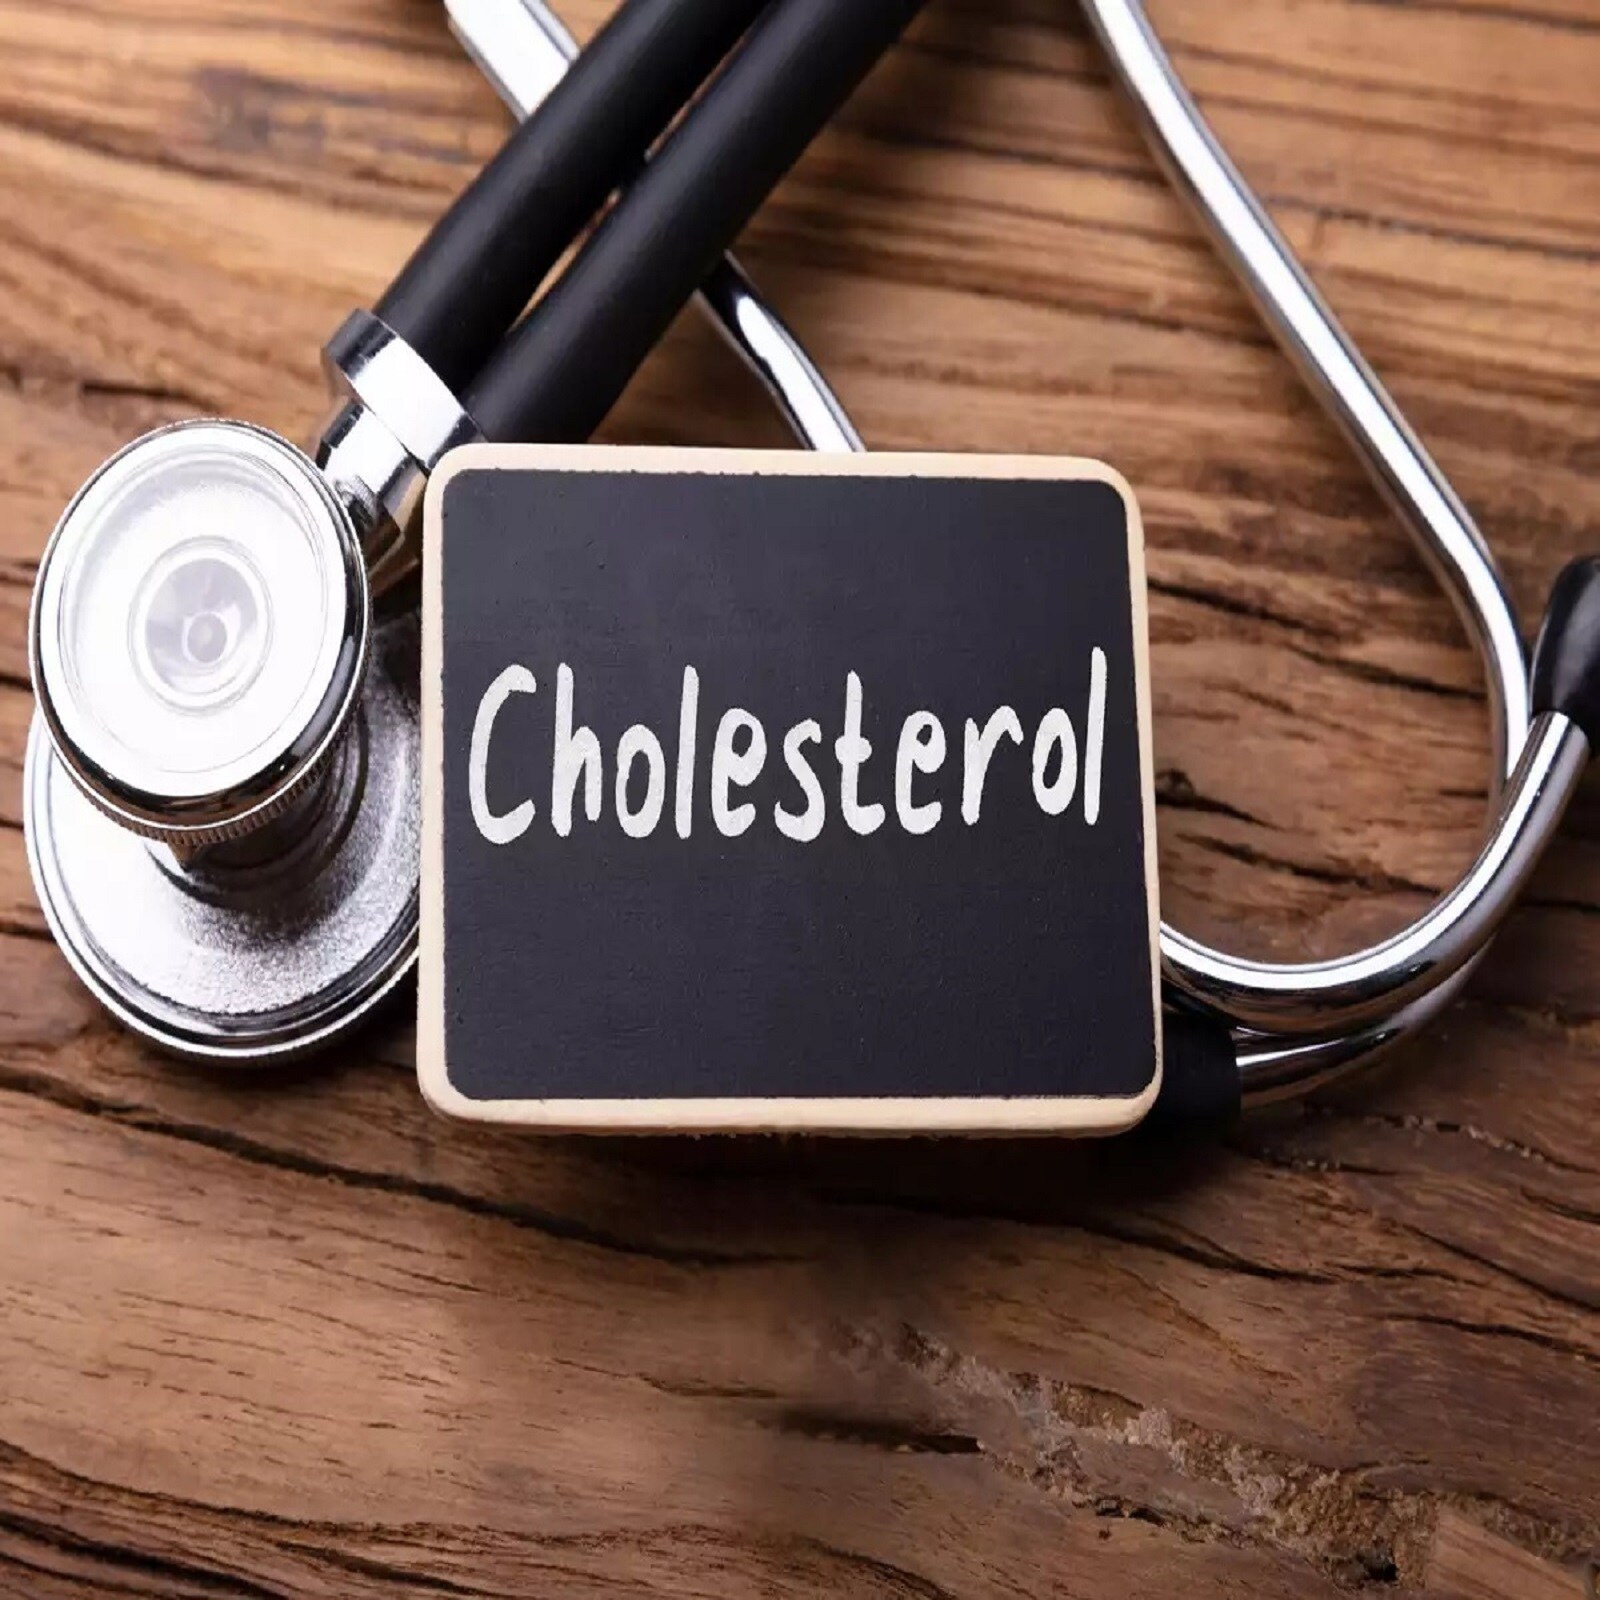 What Is Bad Cholesterol and how to prevent it | Bad Cholesterol: ಕೆಟ್ಟ  ಕೊಲೆಸ್ಟ್ರಾಲ್ ಎಂದರೇನು? ಇಲ್ಲಿದೆ ನೀವು ತಿಳಿಯಲೇಬೇಕಾದ ವಿವರ– News18 Kannada